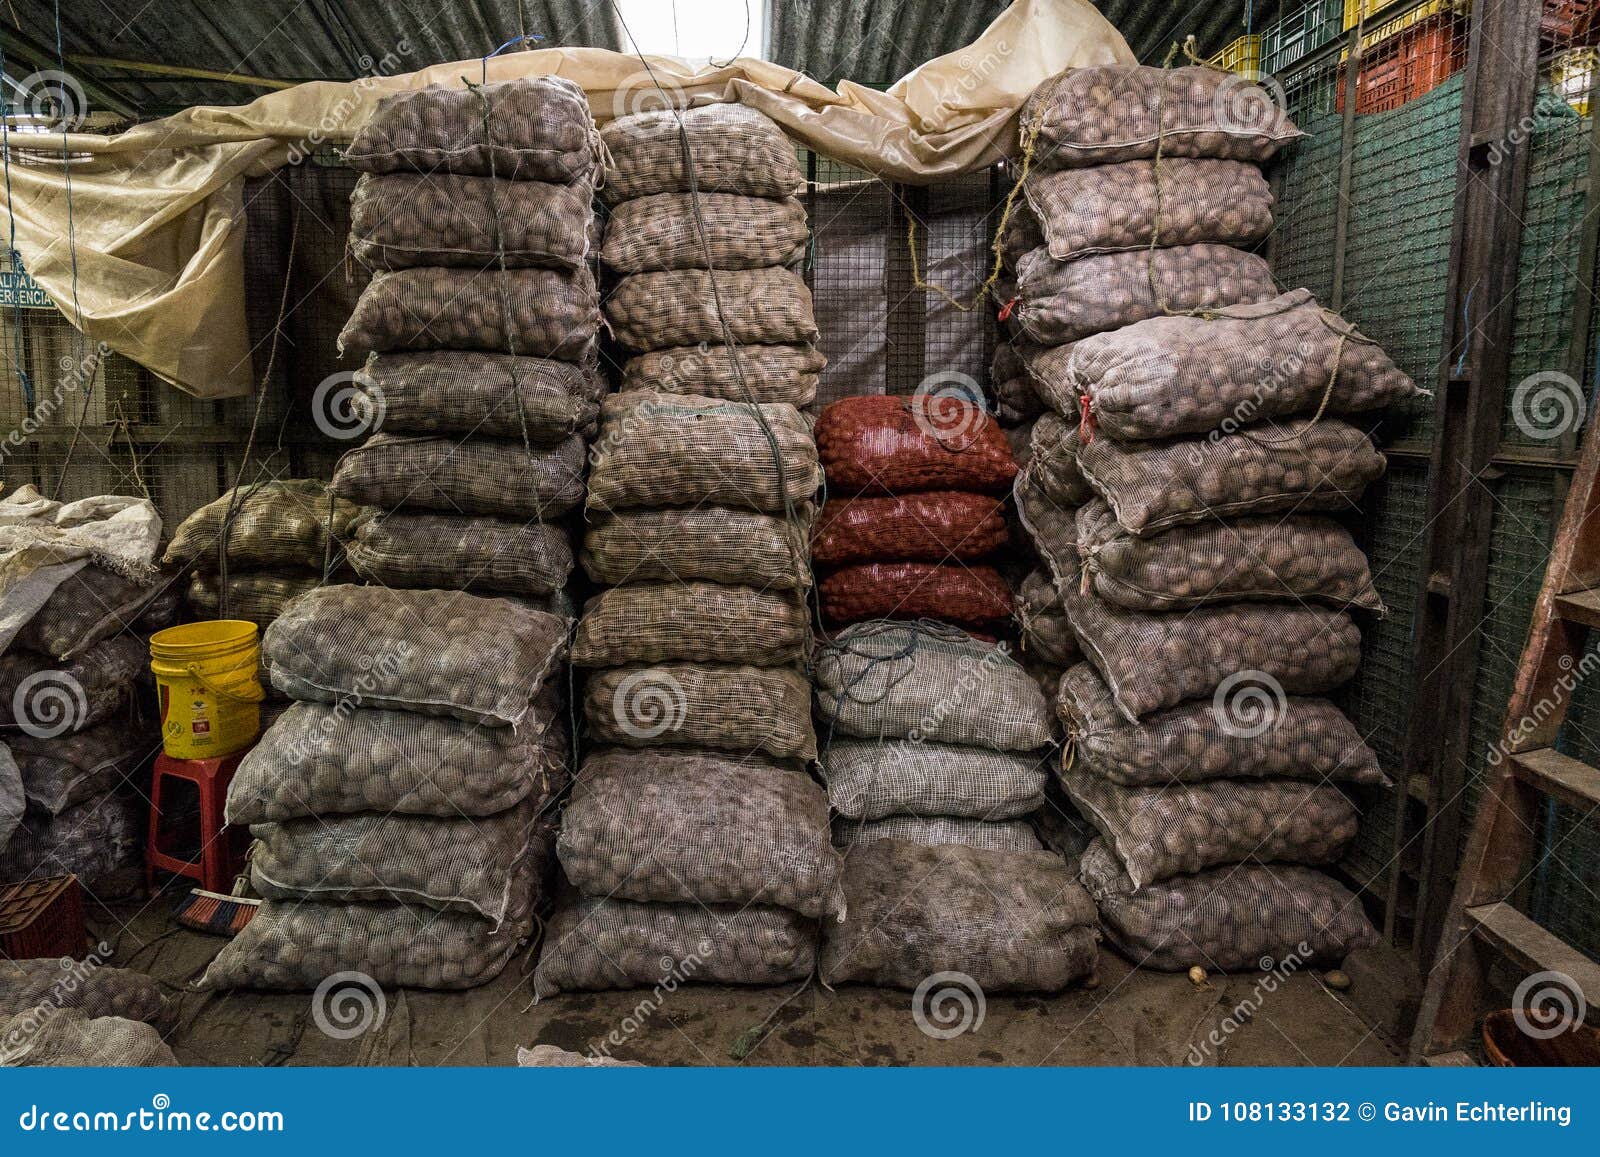 sacks of potatoes at paloqumao market bogotÃÂ¡